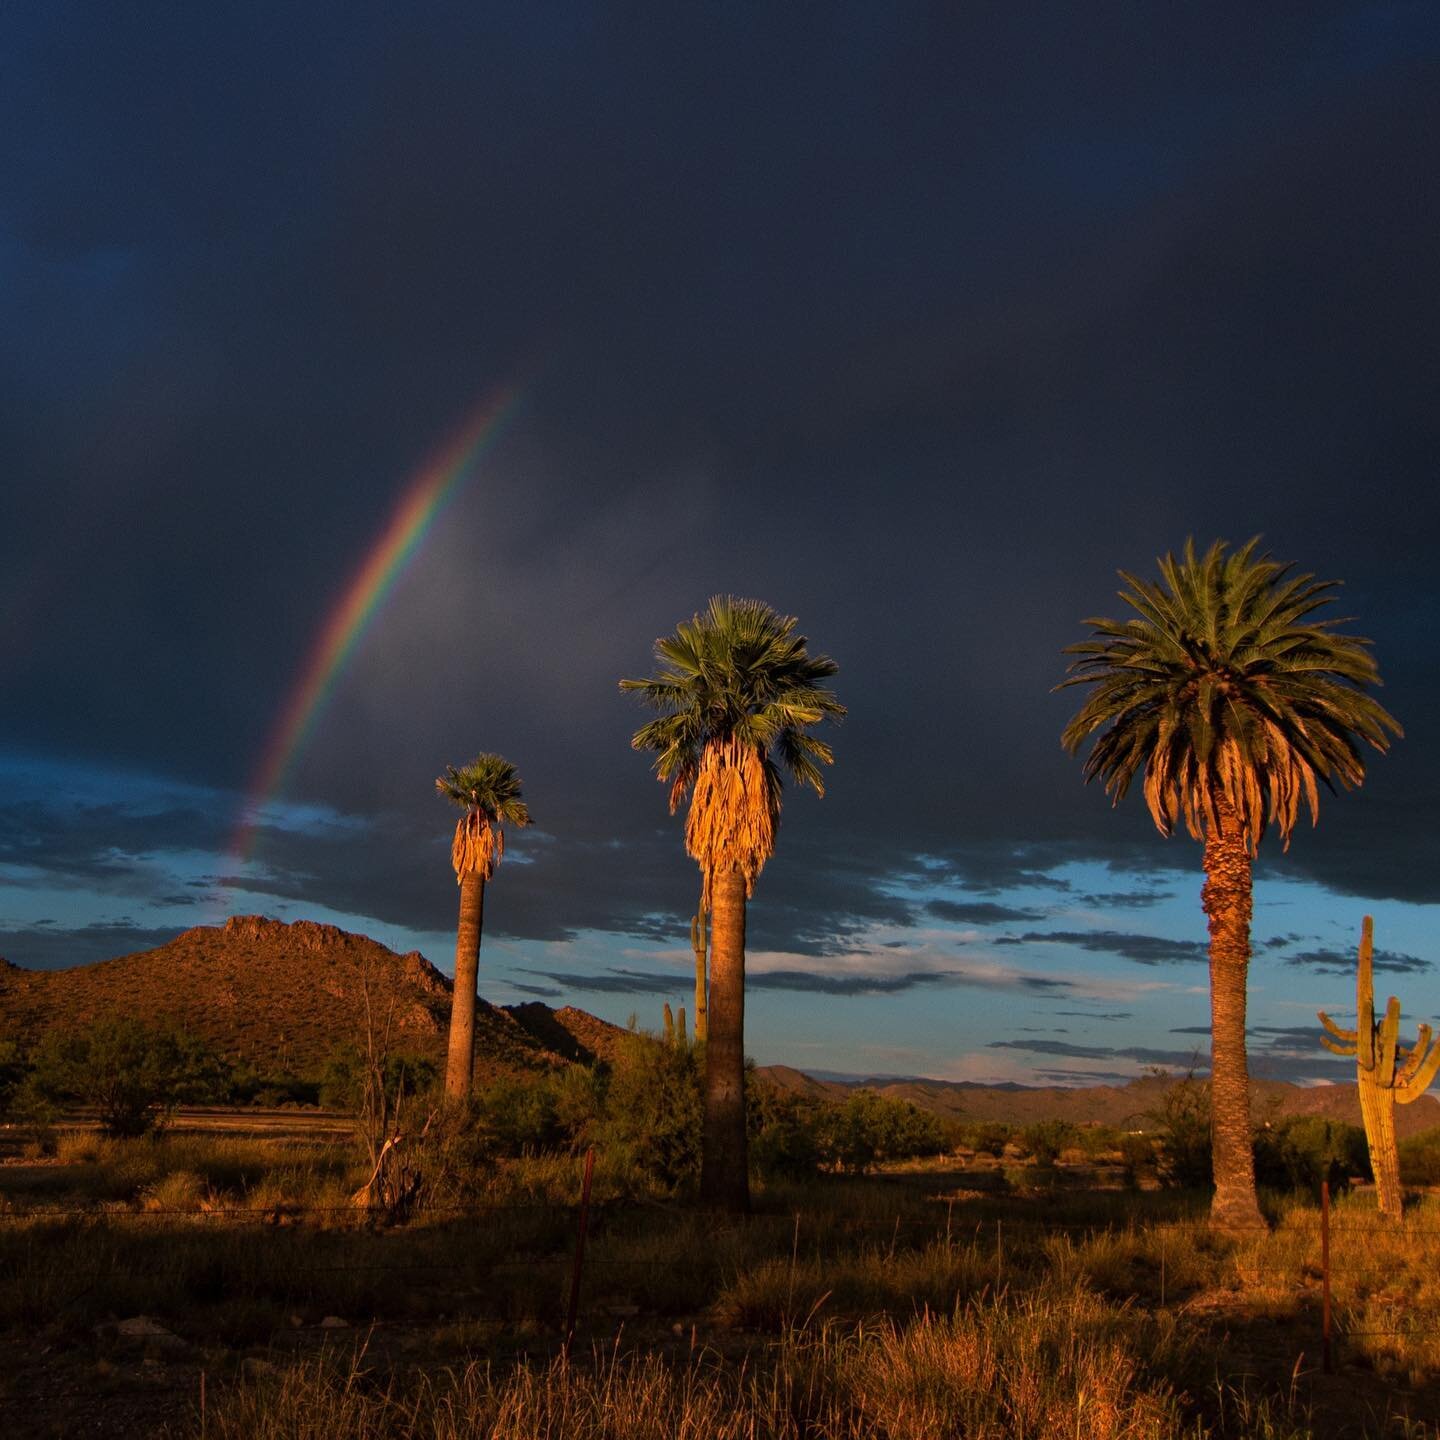 Looking forward to warmer days! #rainbow #azphotographer  #palmtrees #monsoon